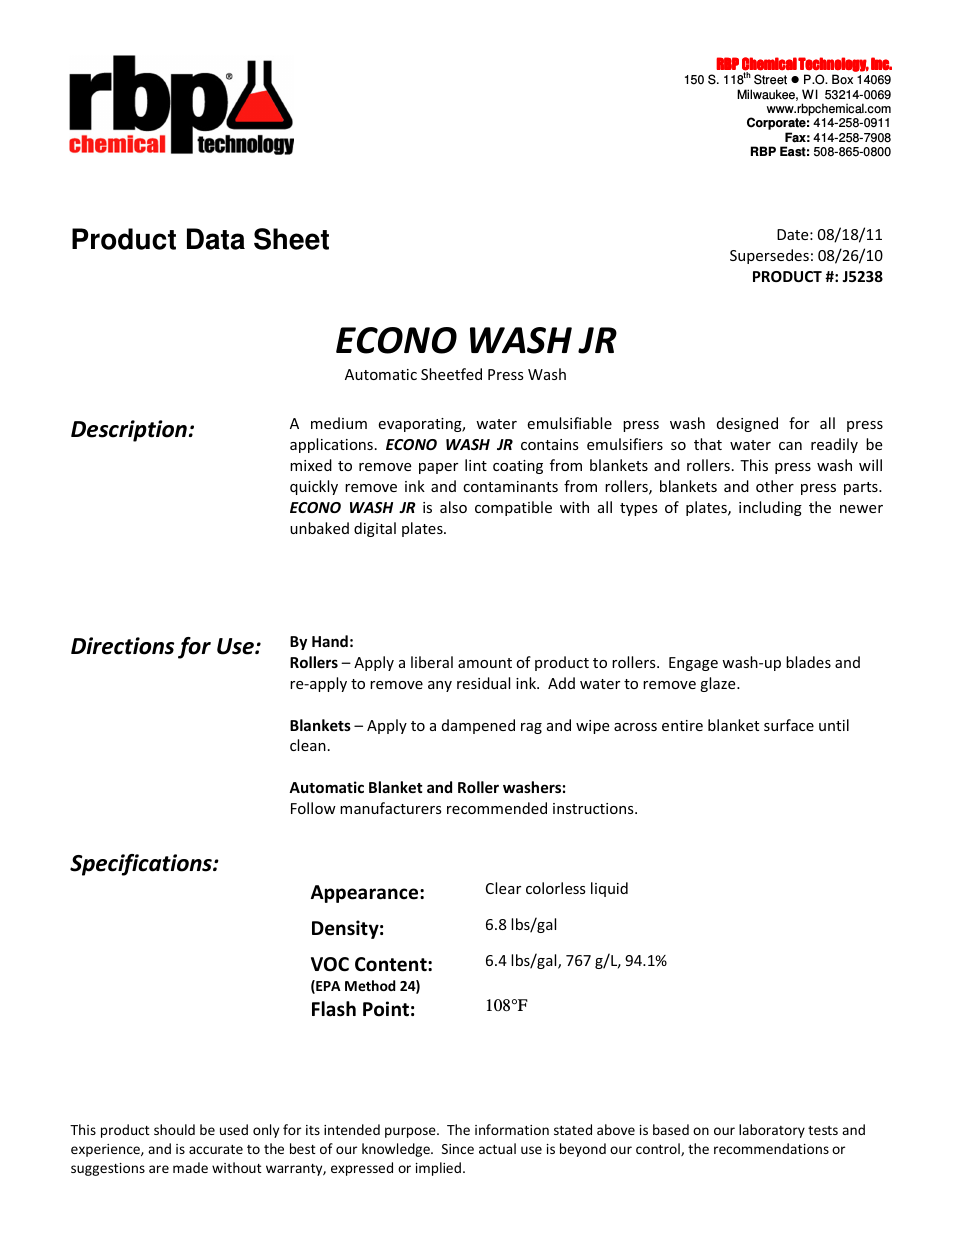 J5238 ECONO WASH JR